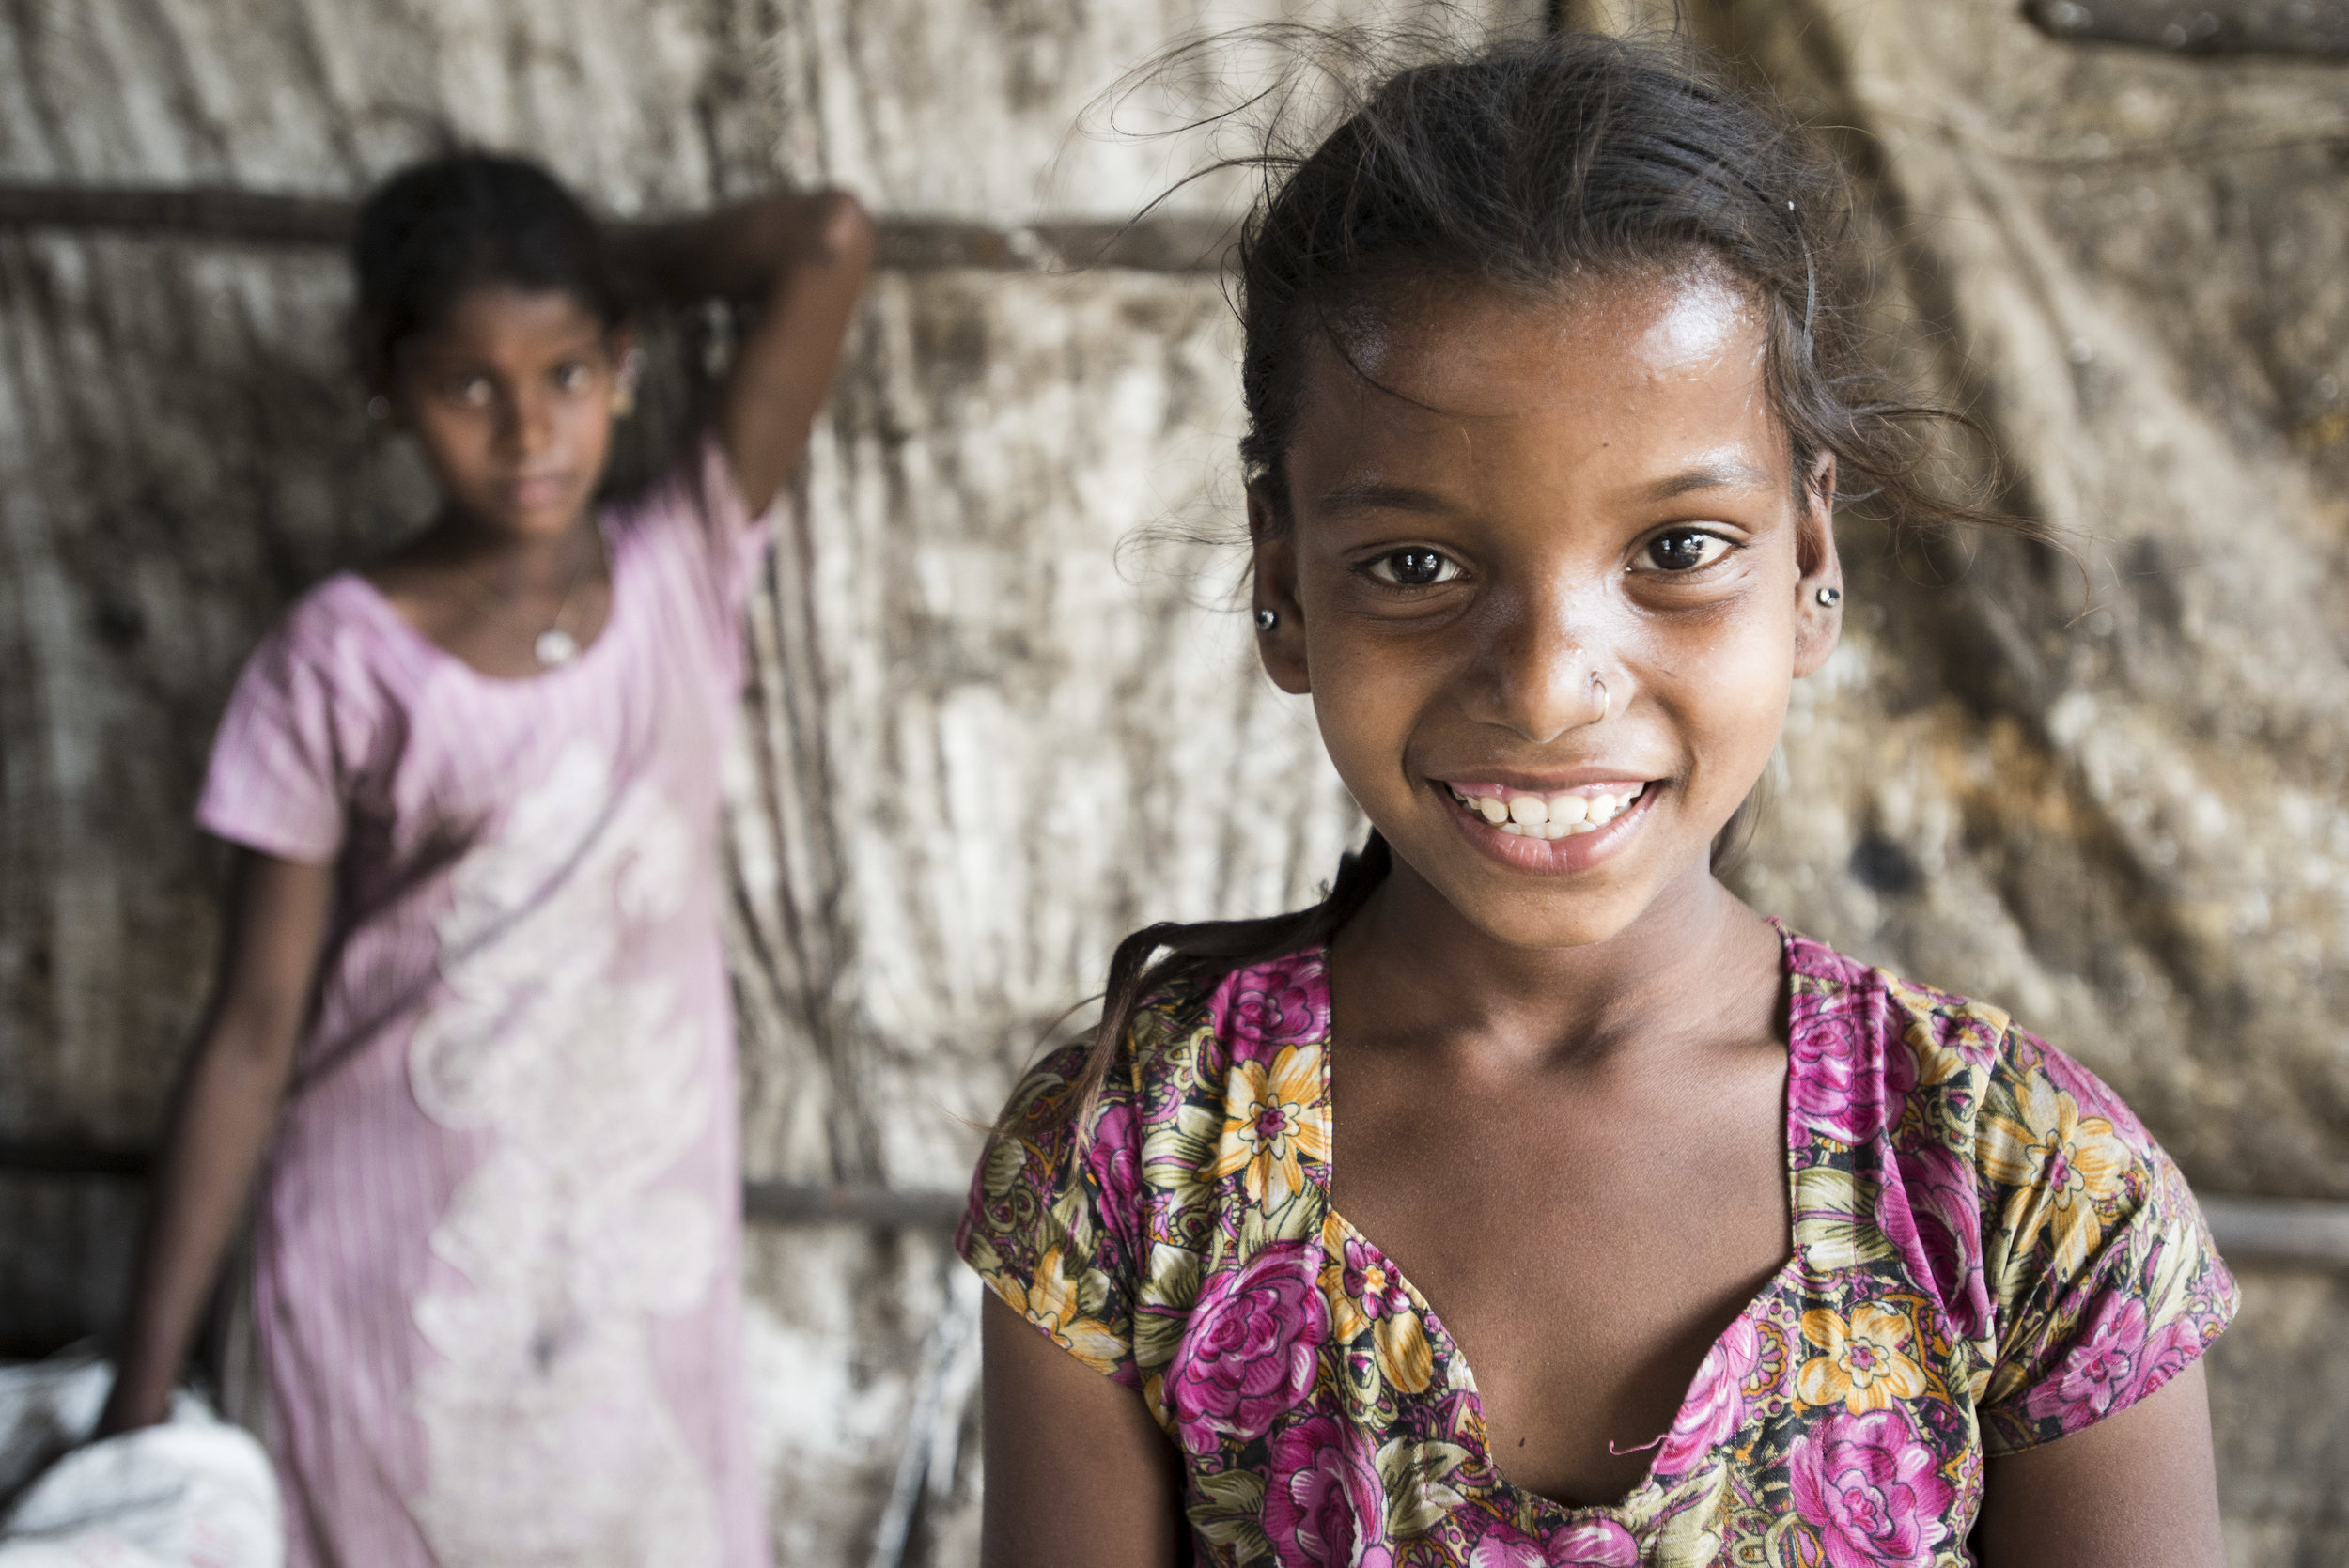  Child labour project. Kolkata, India. 2015. 